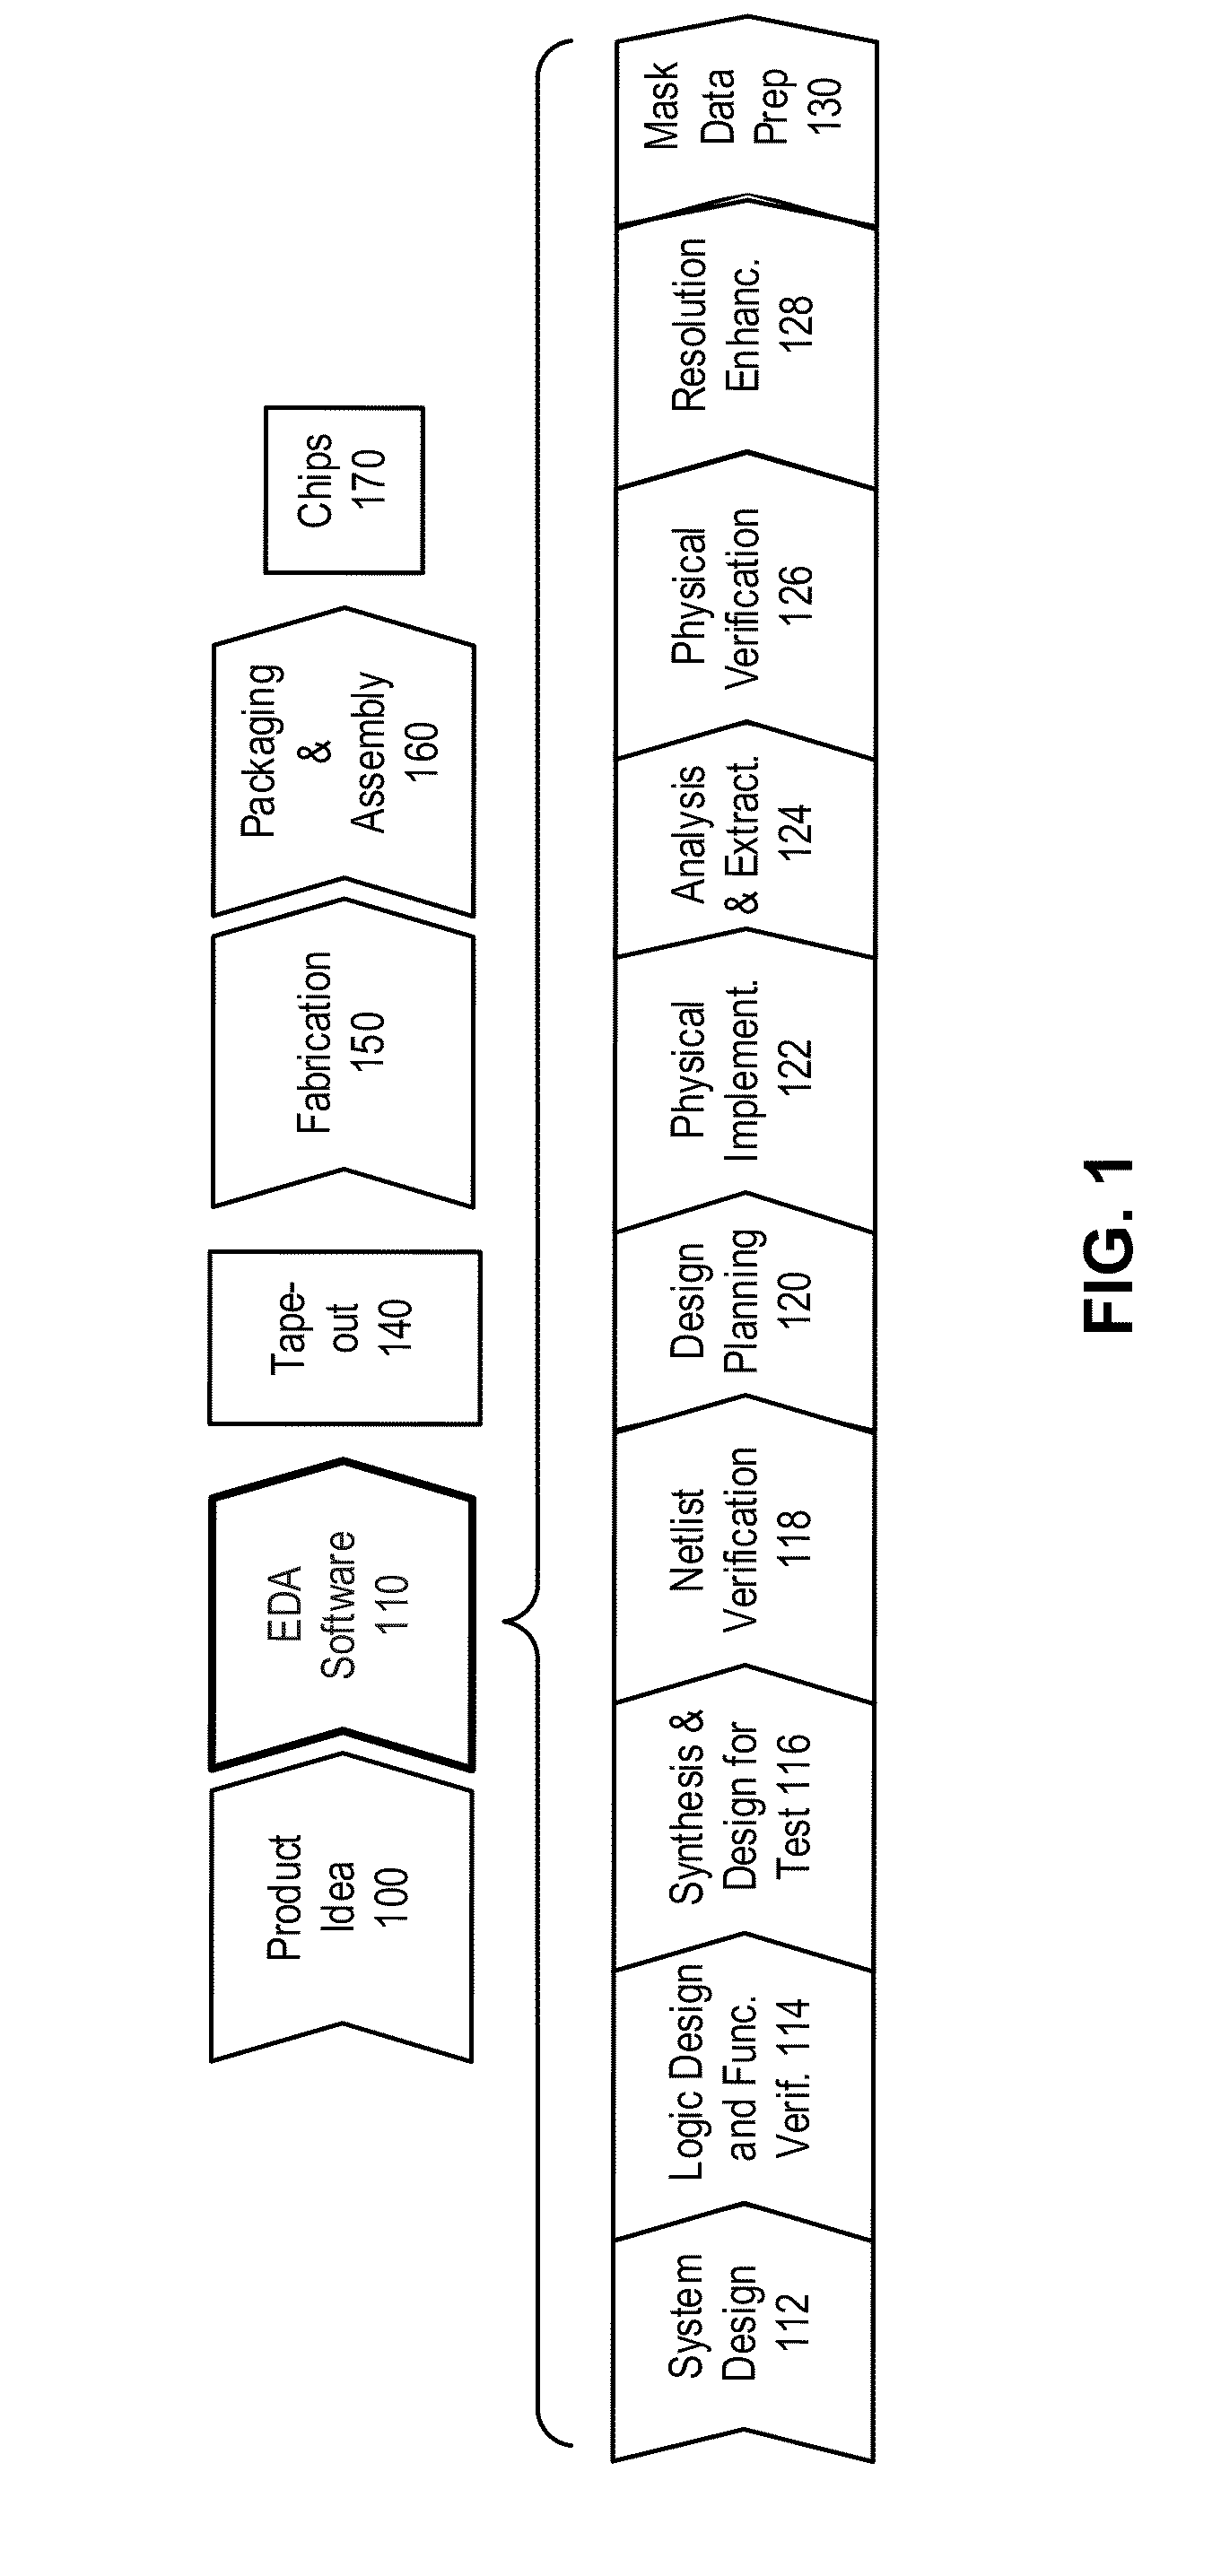 Method and apparatus for performing redundant via insertion during circuit design